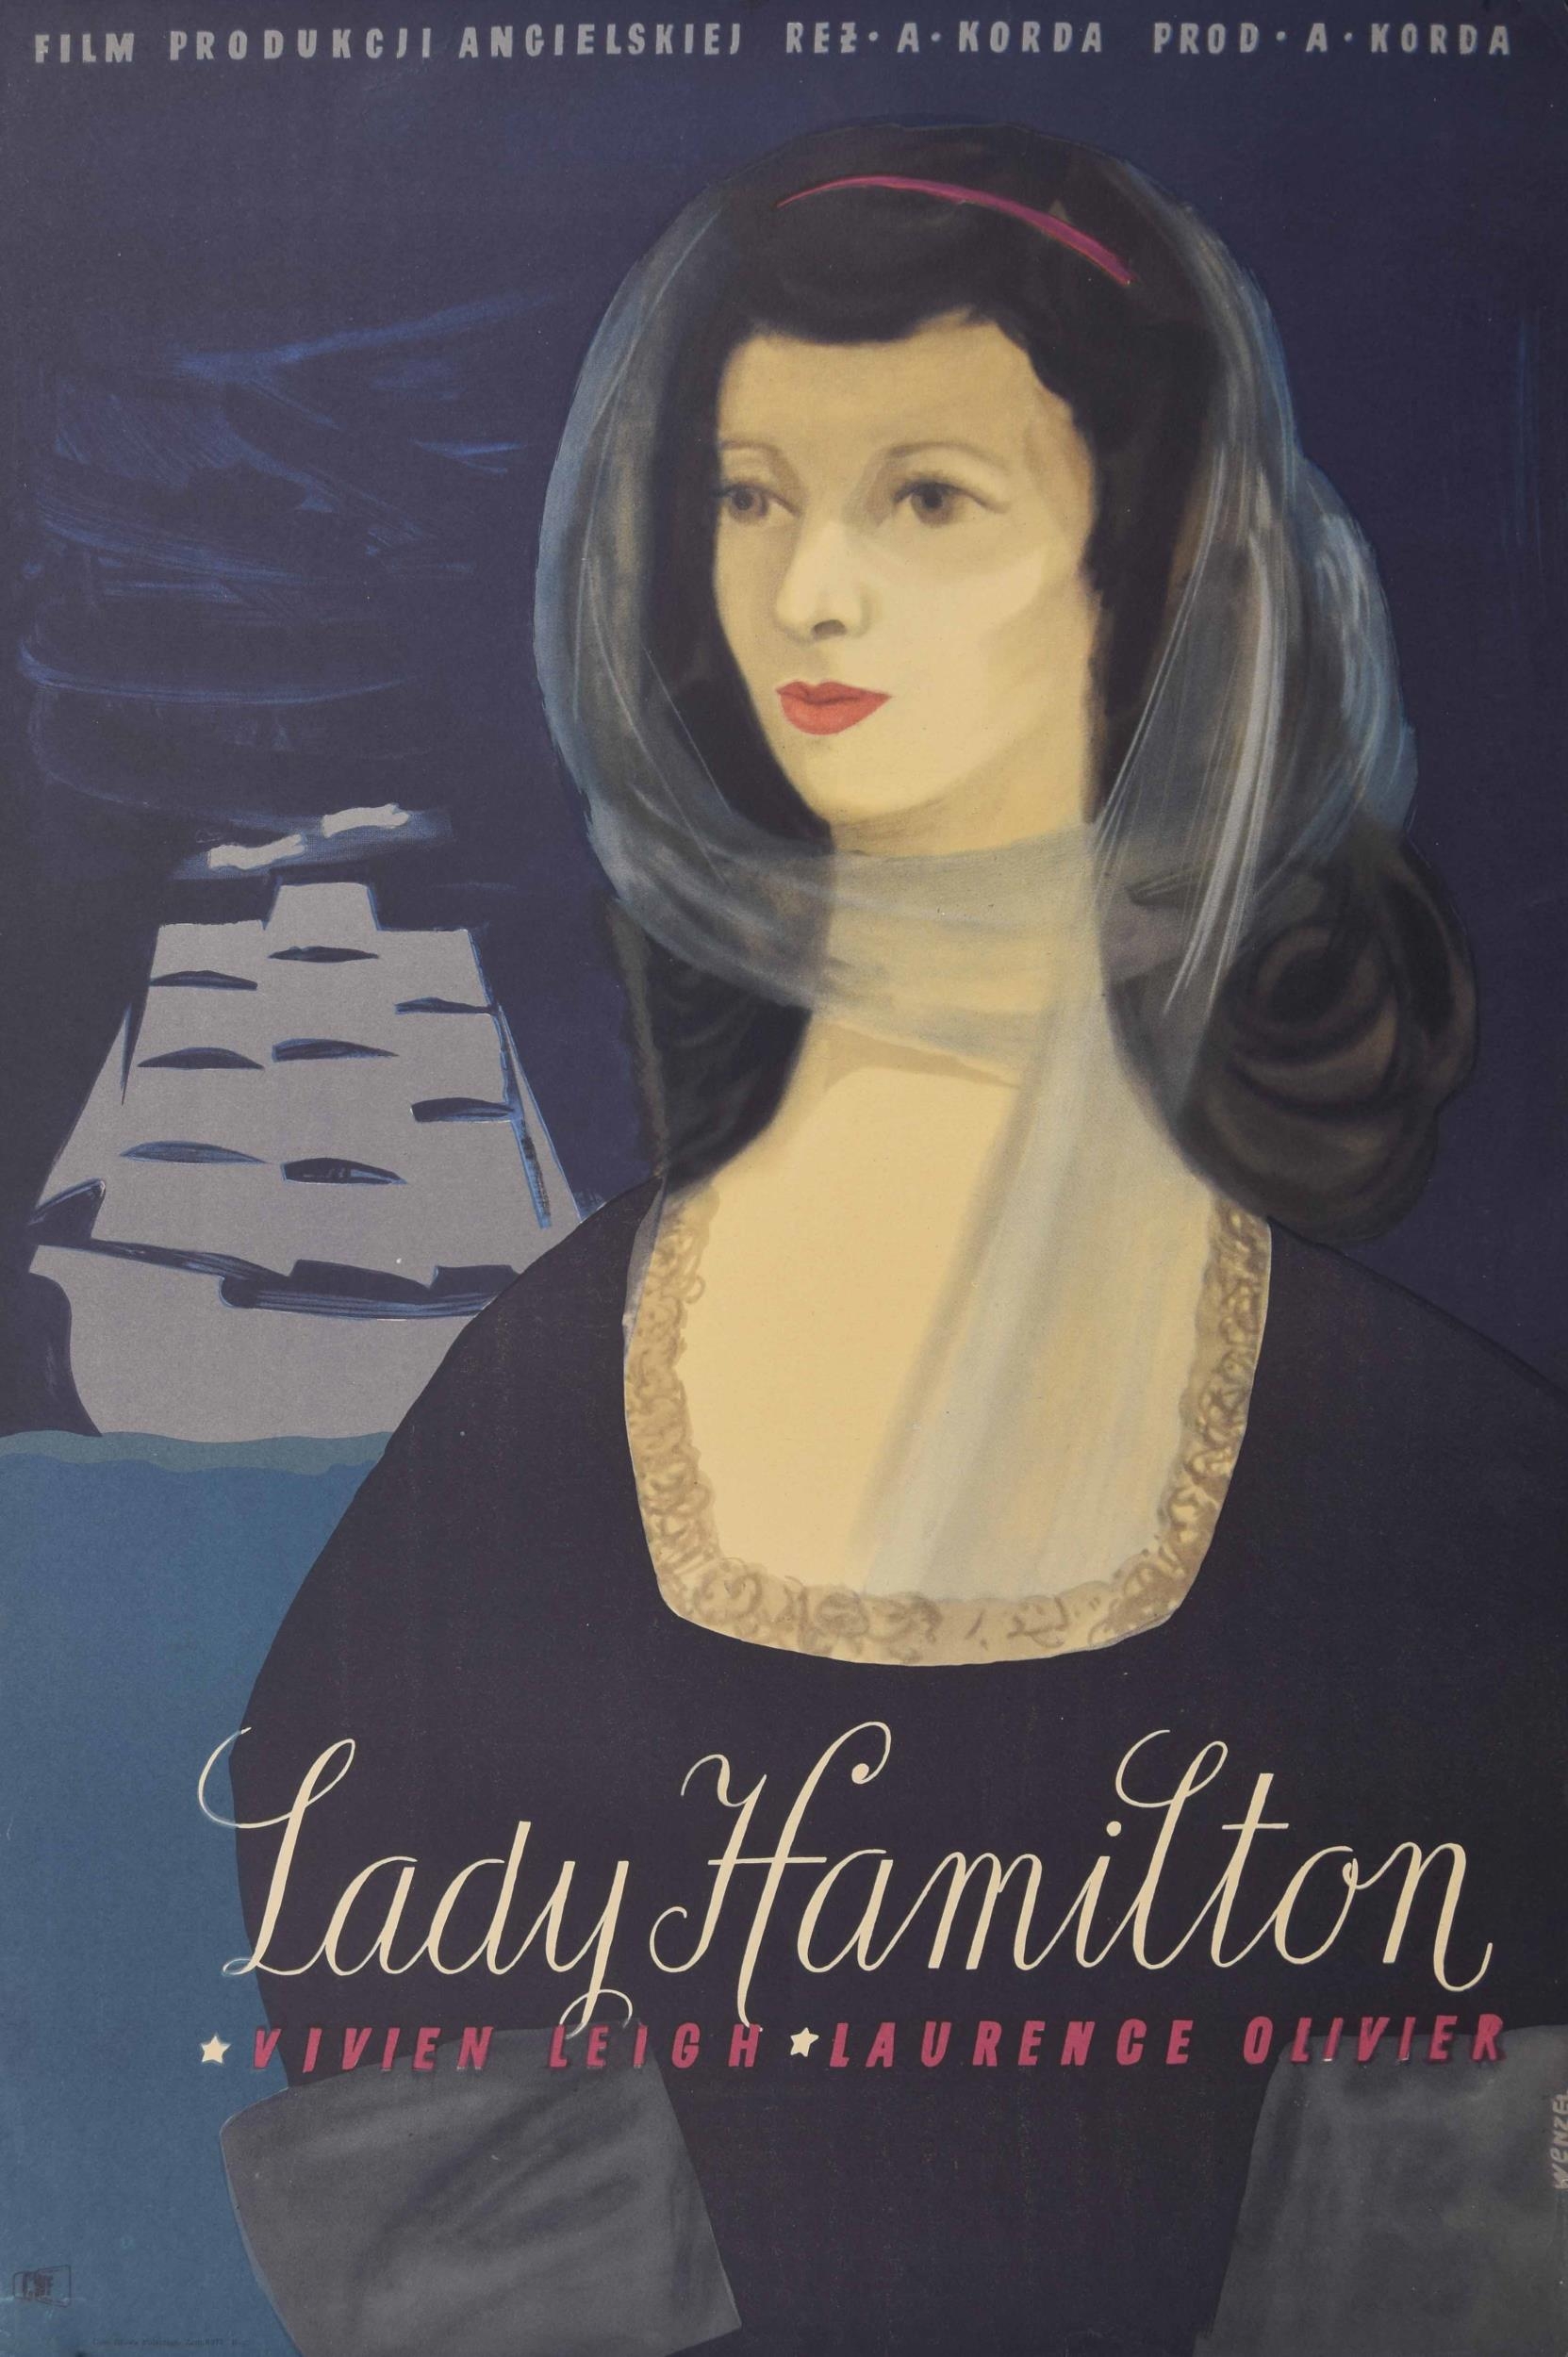 Lady Hamilton (released UK alternative title "That Hamilton Woman") - Polish release movie poster,